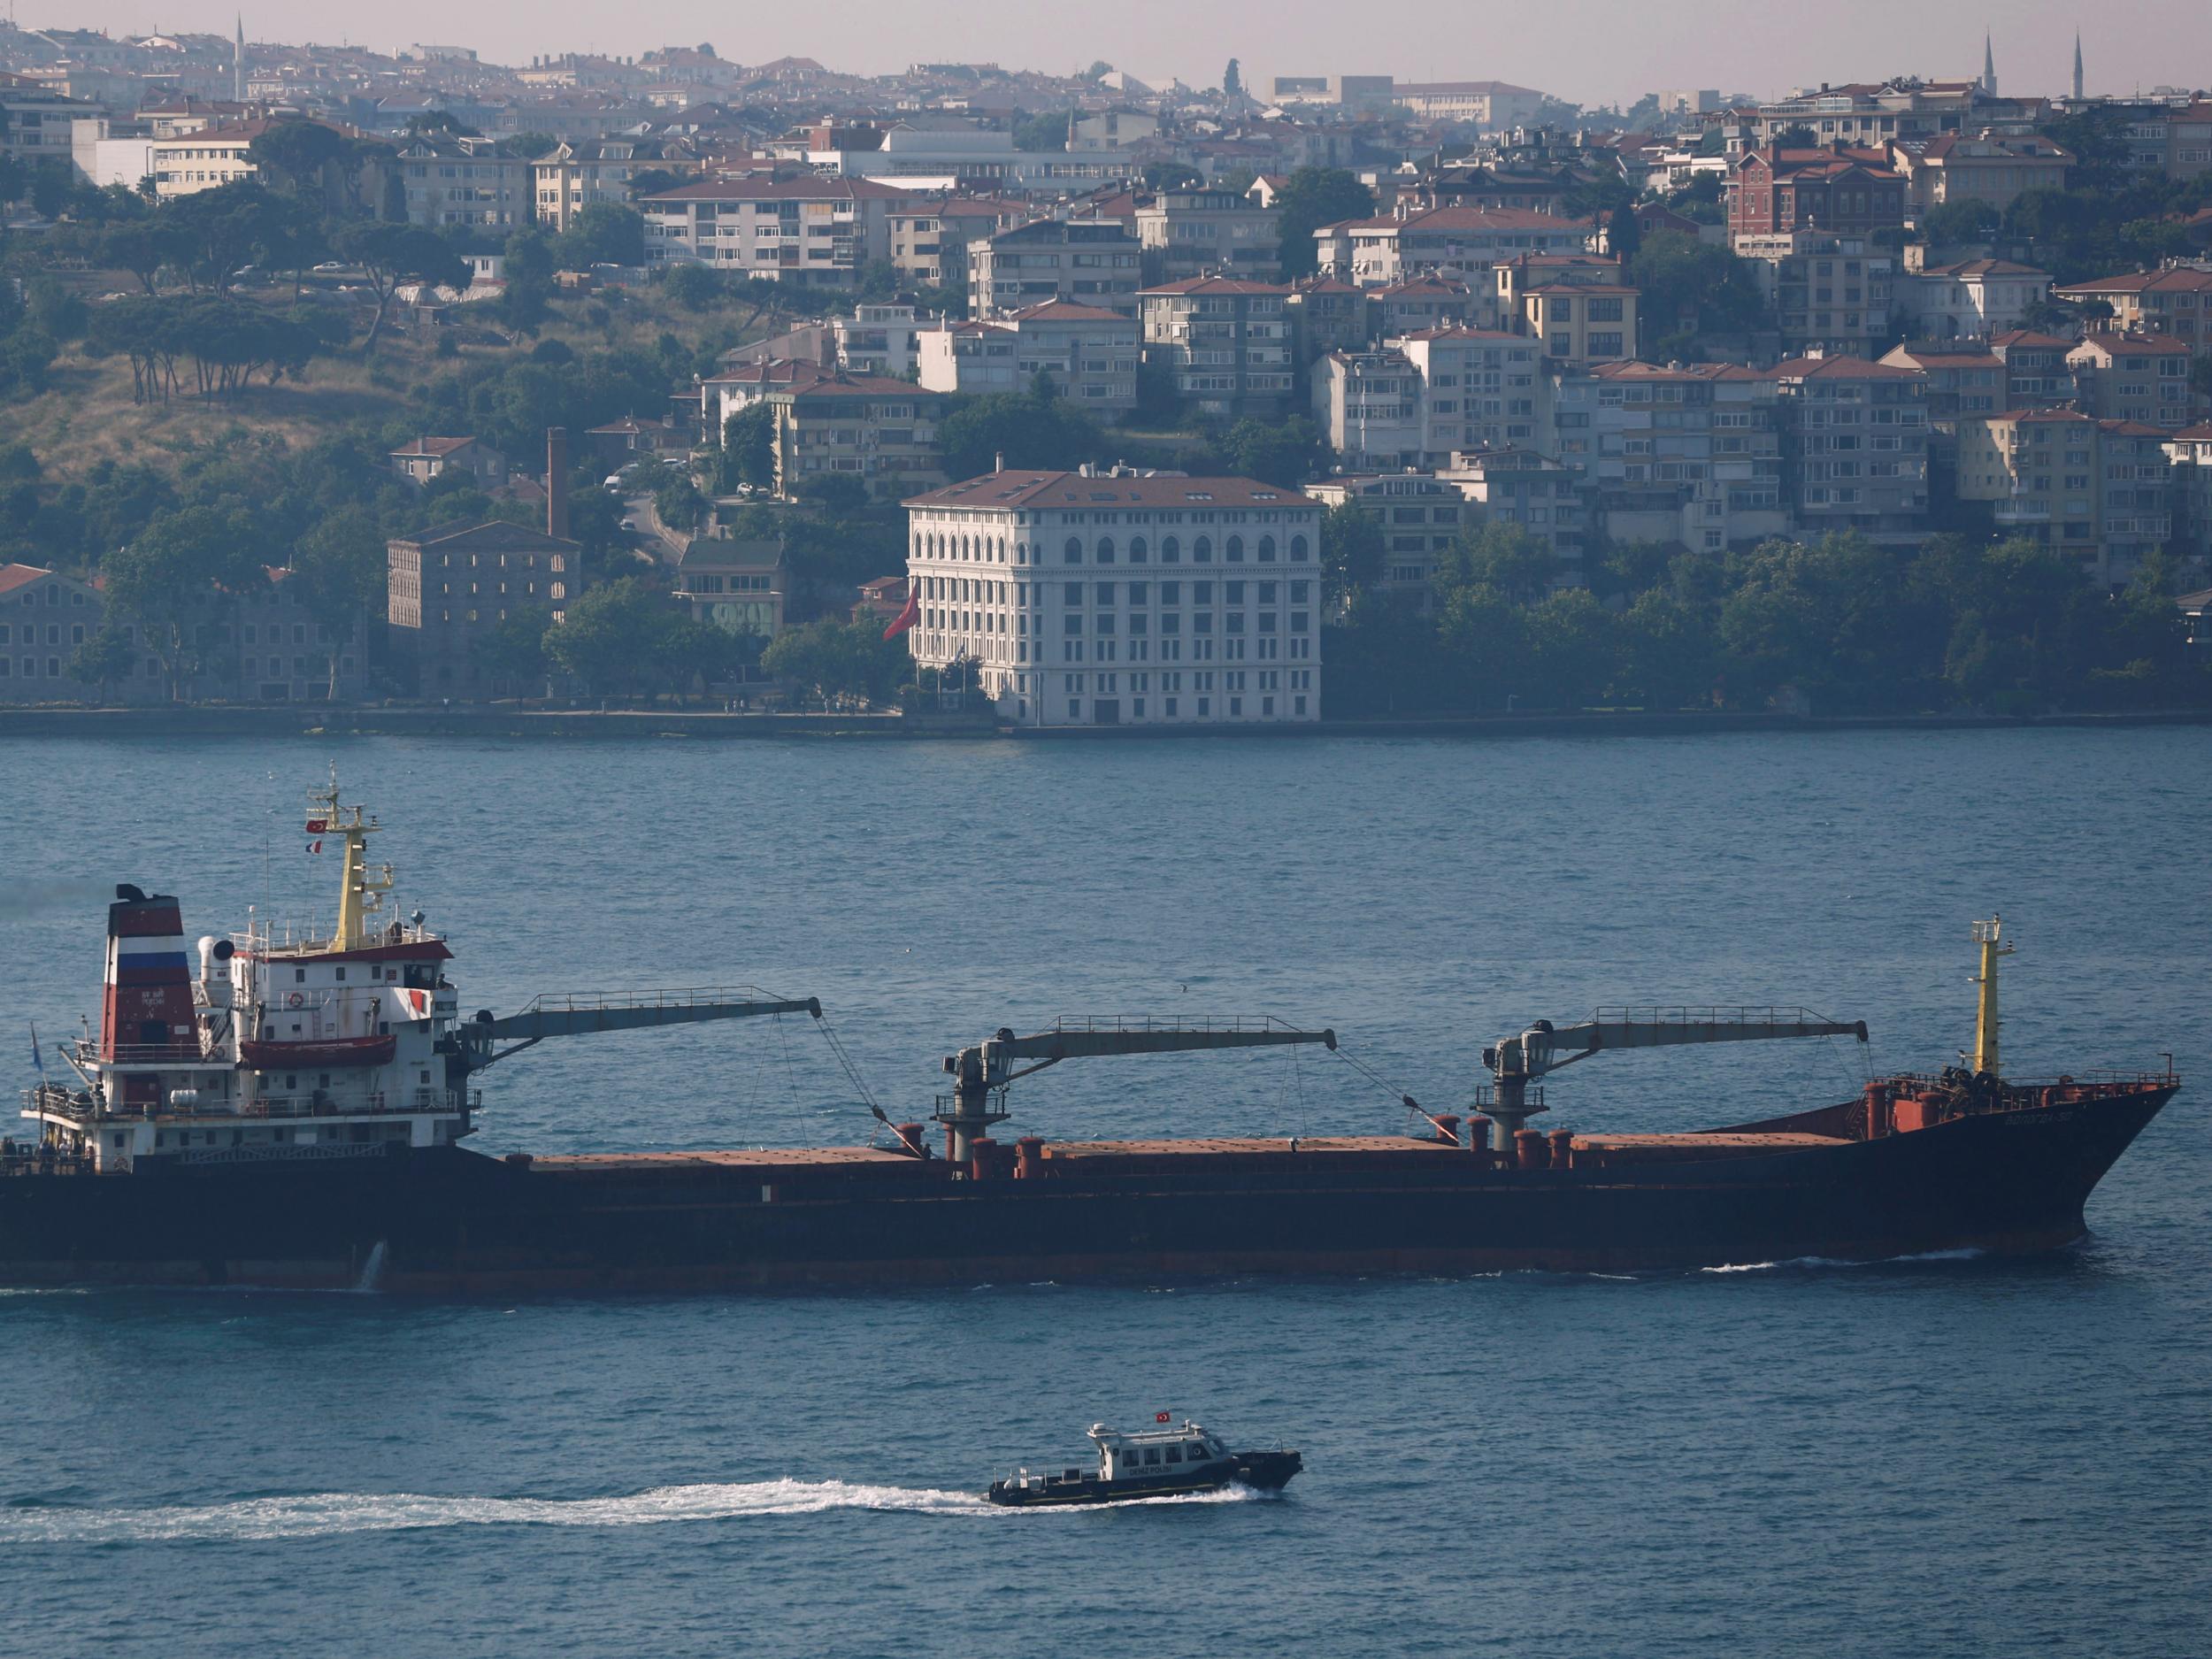 A Russian cargo ship en route to Turkey